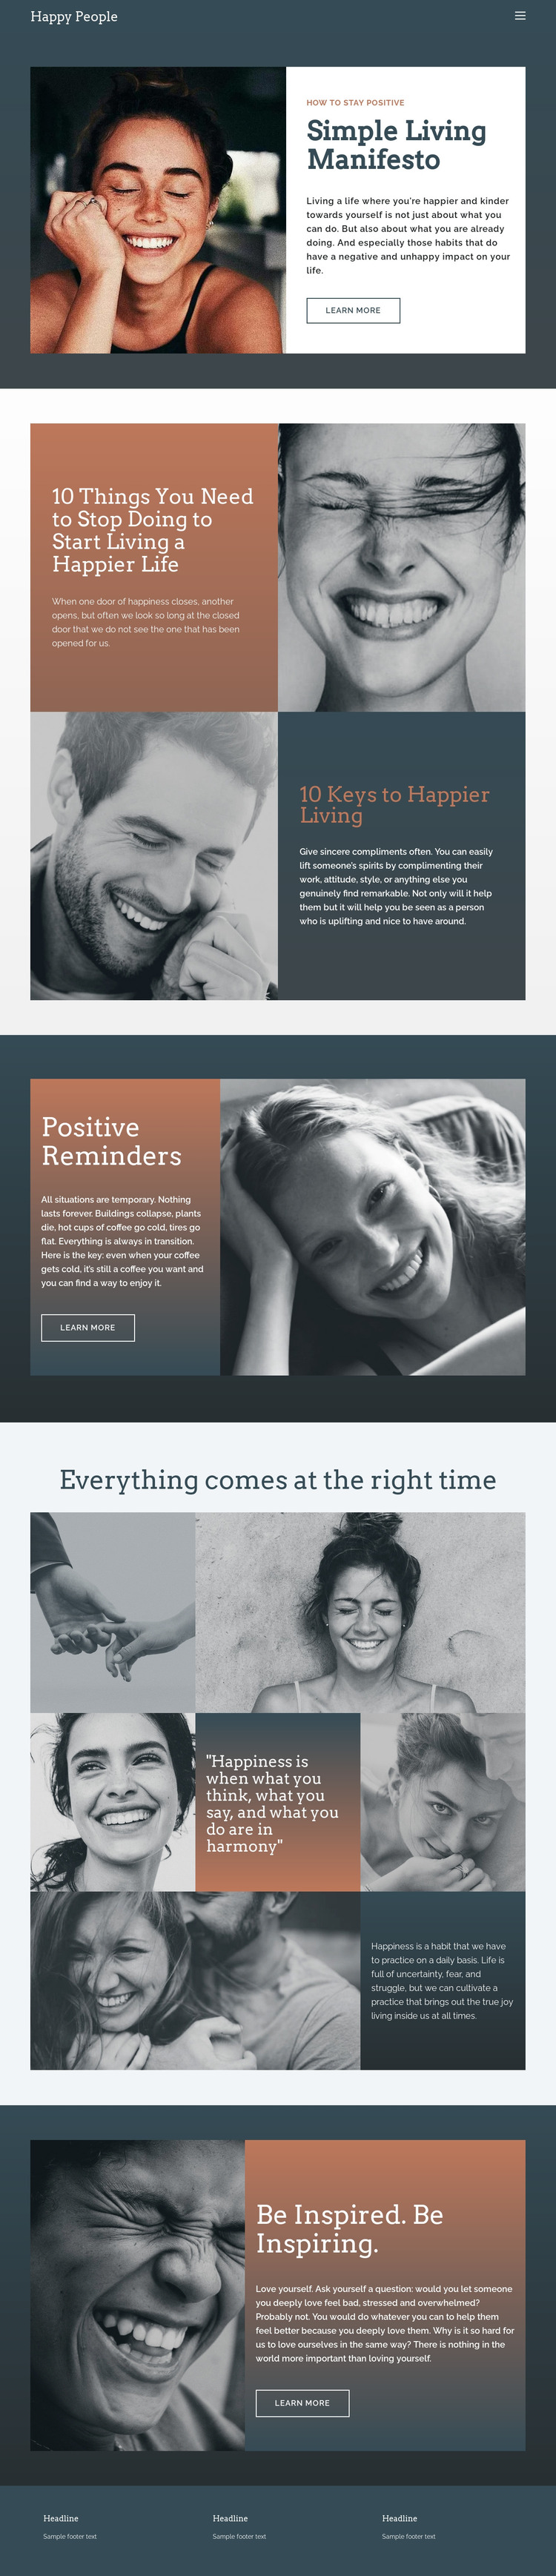 Simple living manifesto Homepage Design